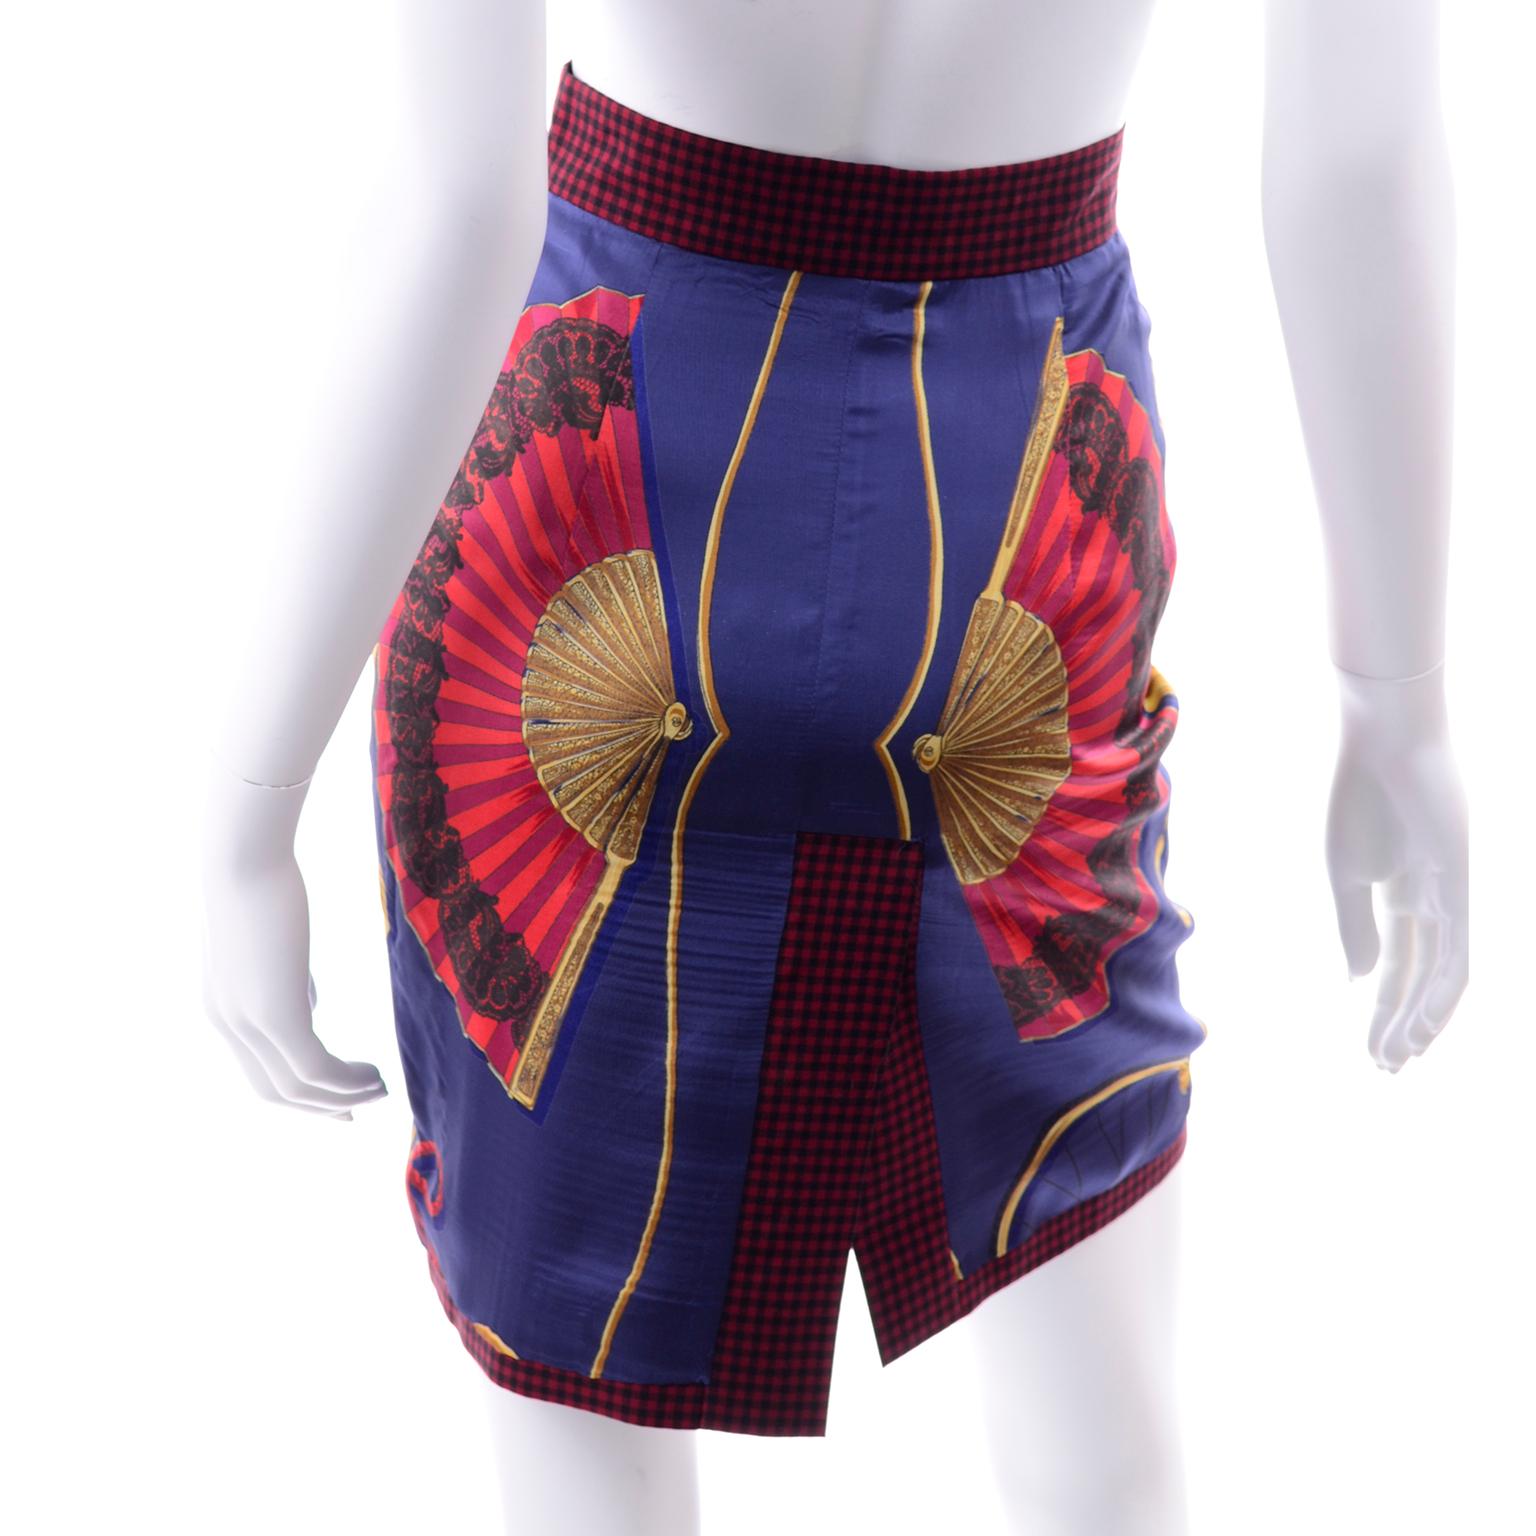 Vintage Franco Moschino Pret a Porter Nautical Print Skirt w/ Fans & Vines 2